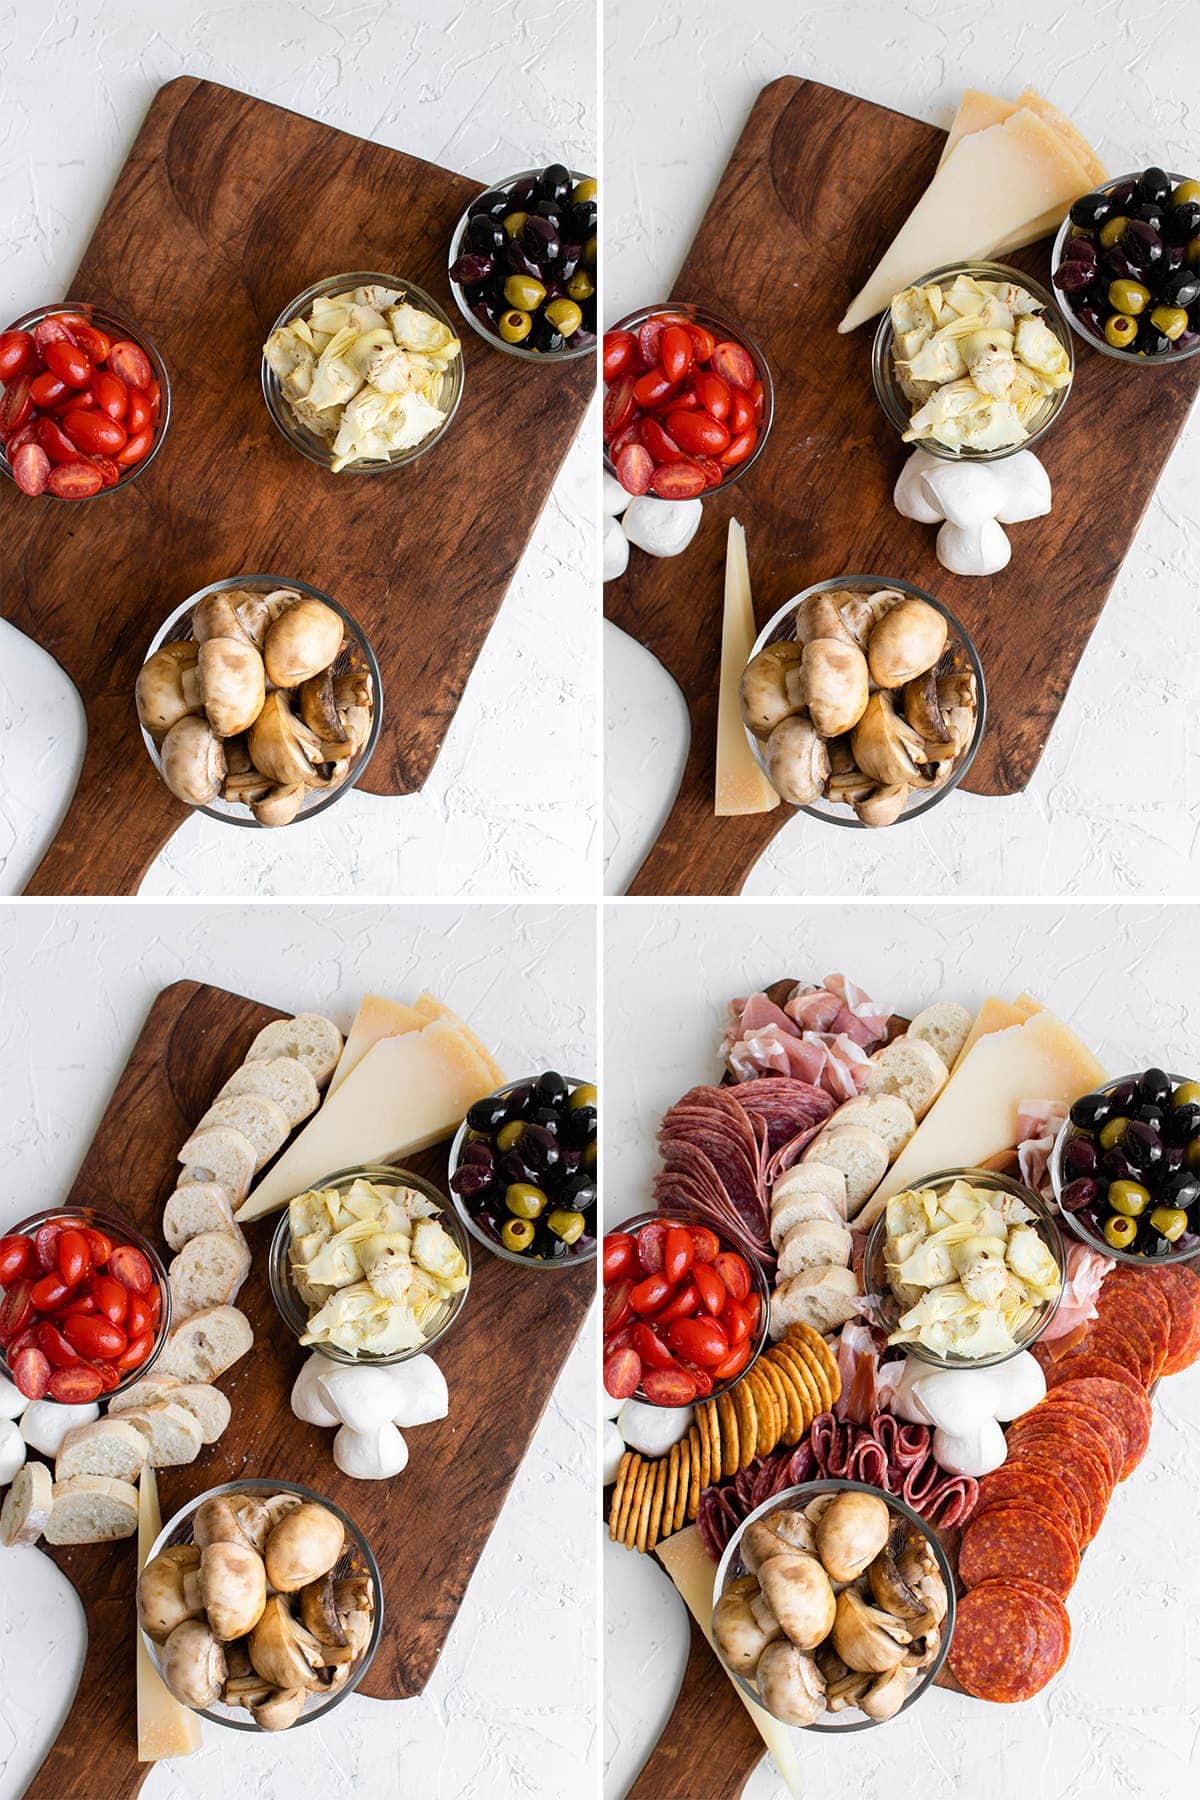 4 image collage of assembling an antipasto platter